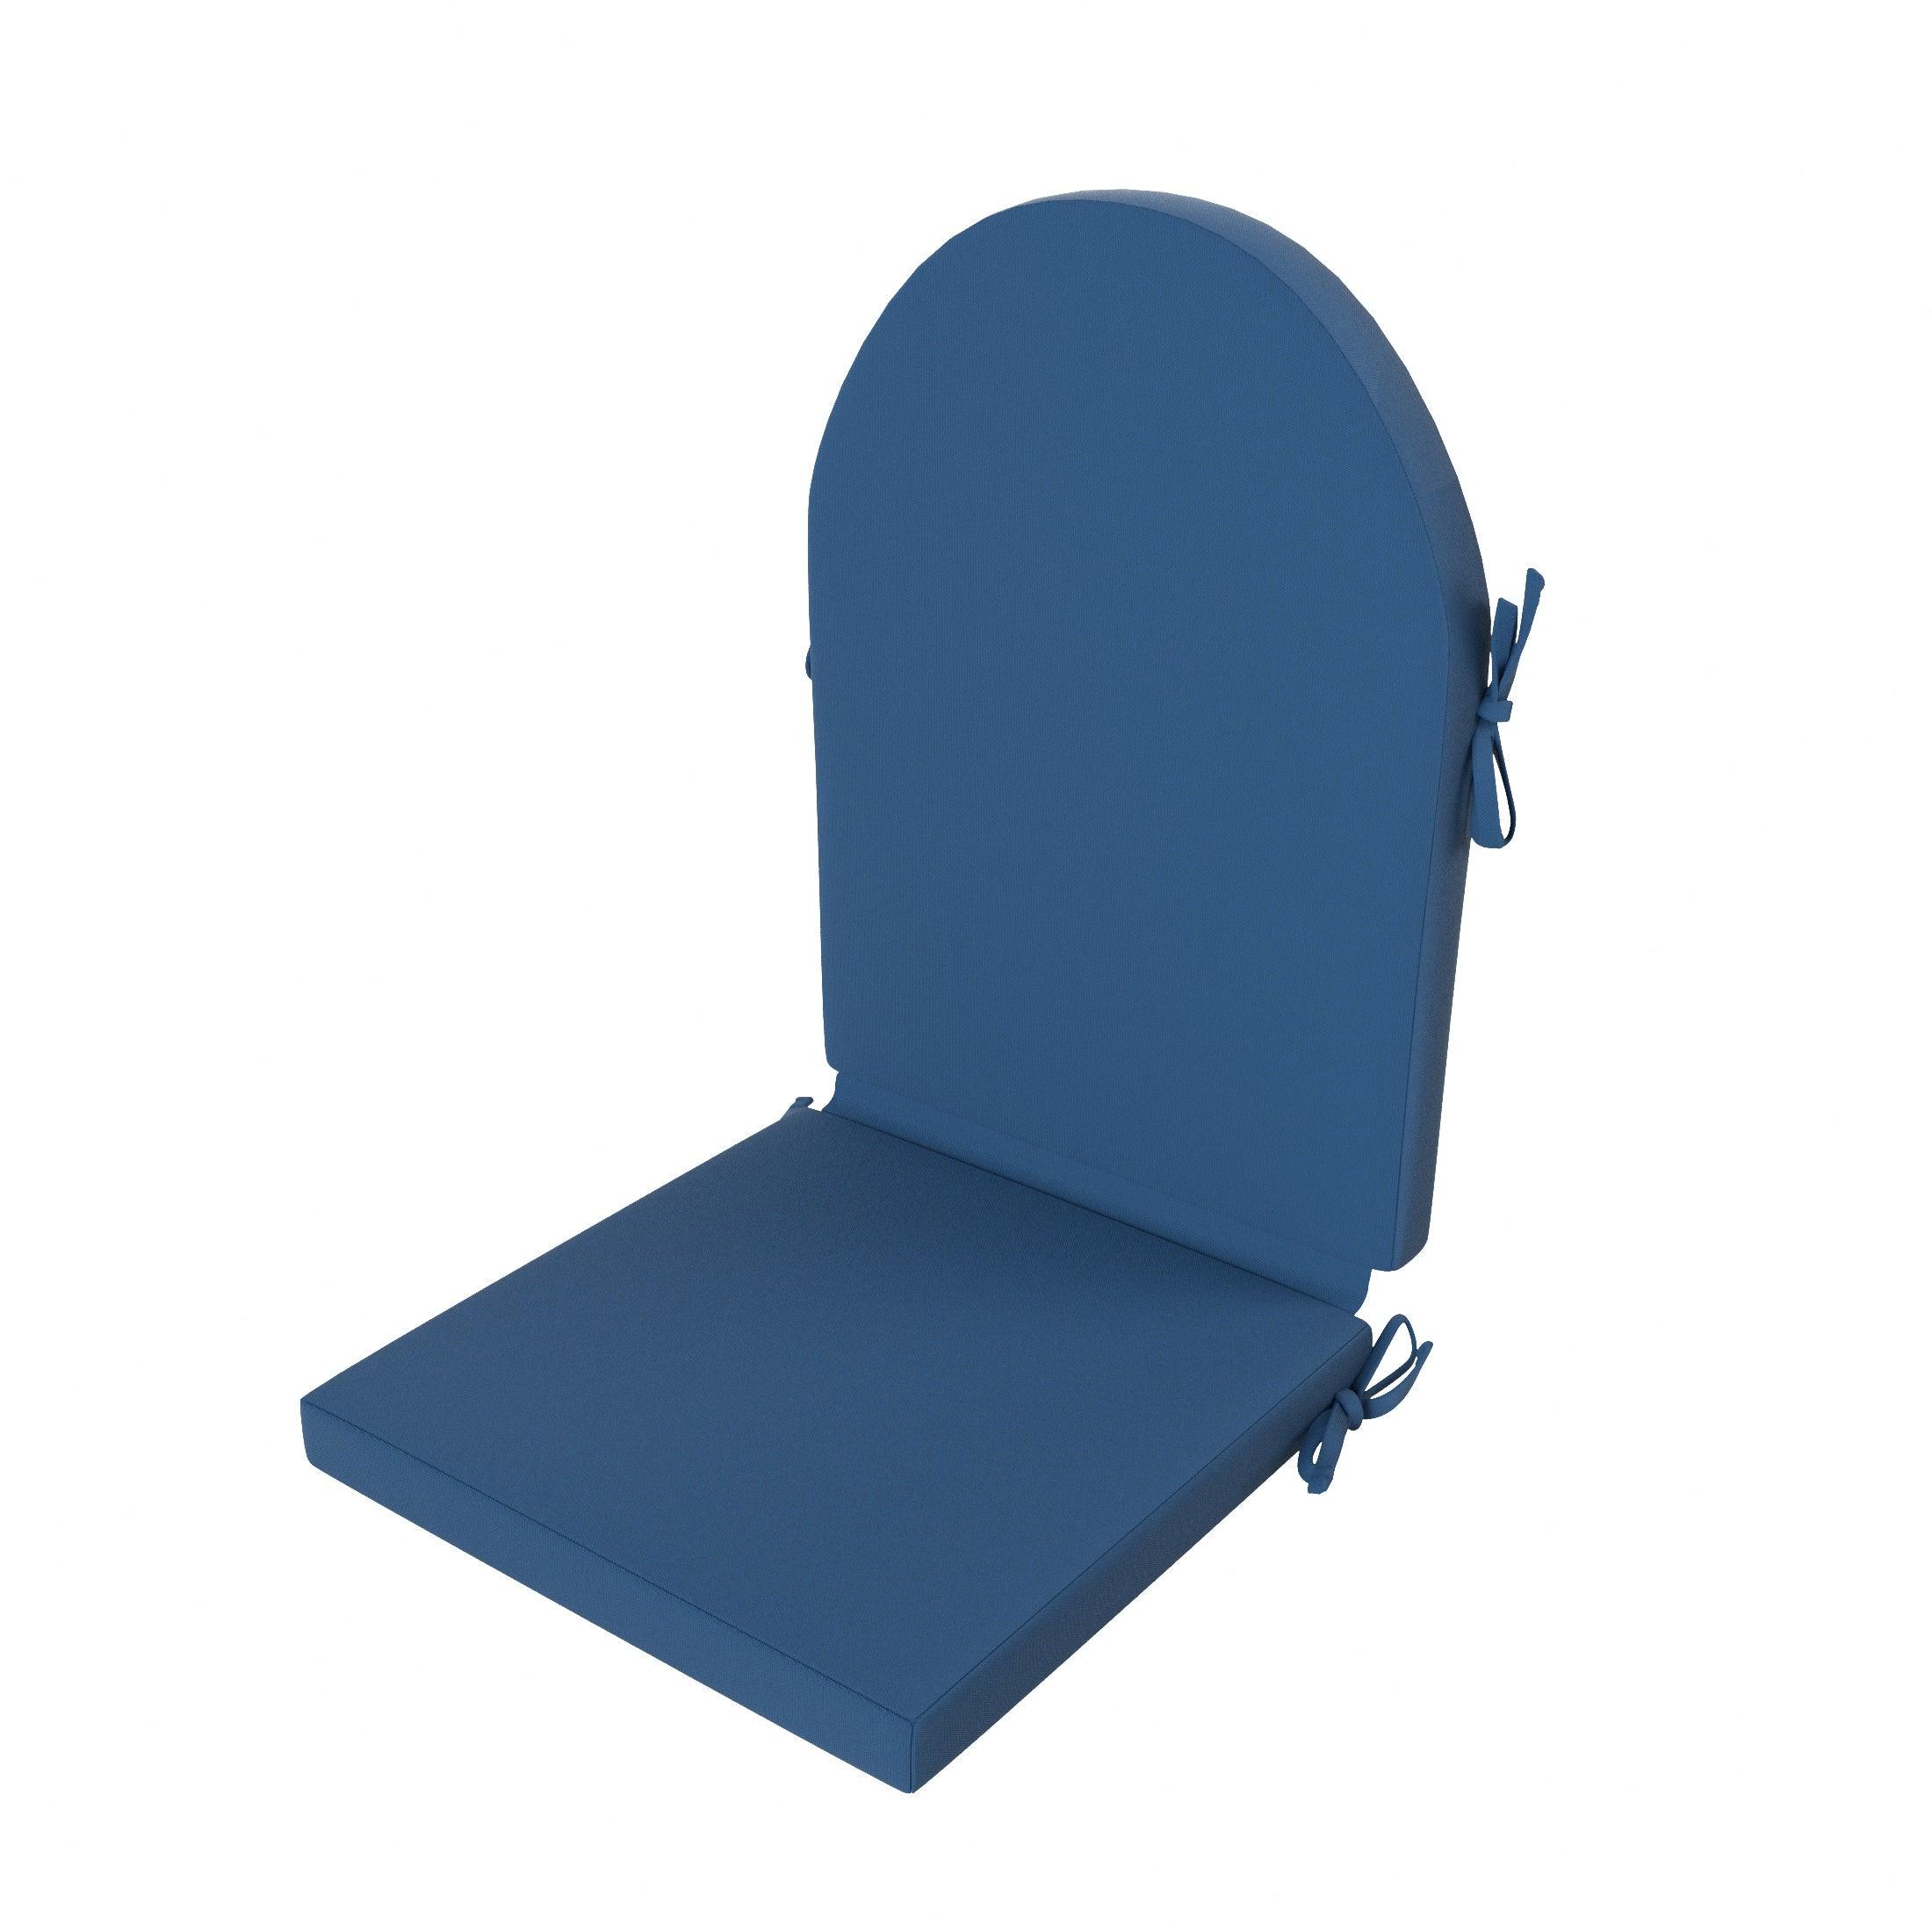 Paradise Adirondack Chair Seat and Back Cushion - Costaelm